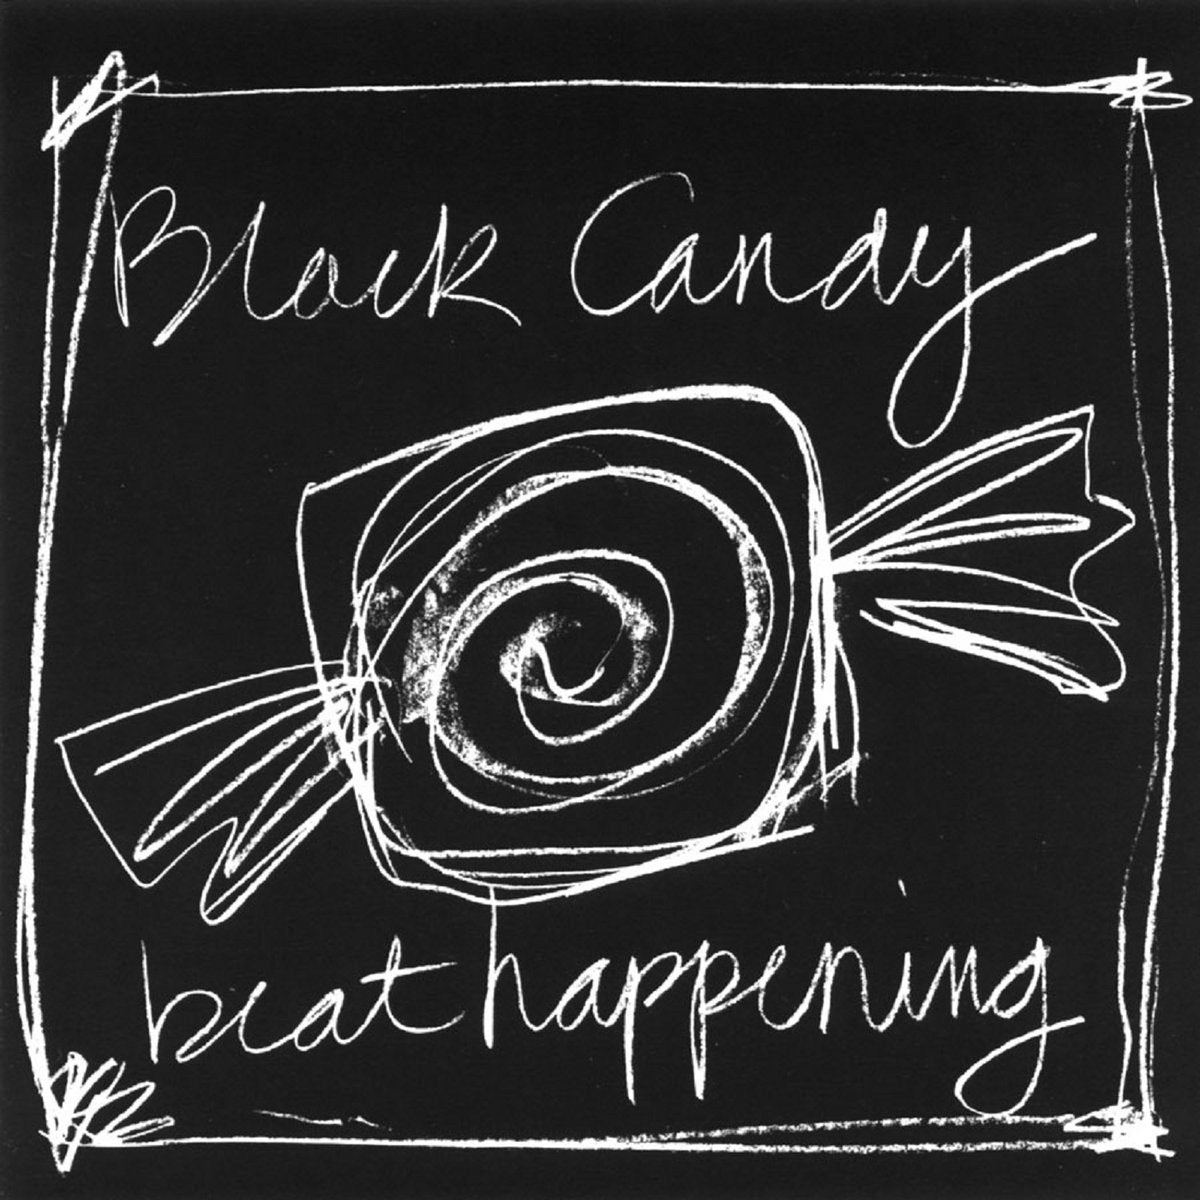 Beat Happening ~ Black Candy